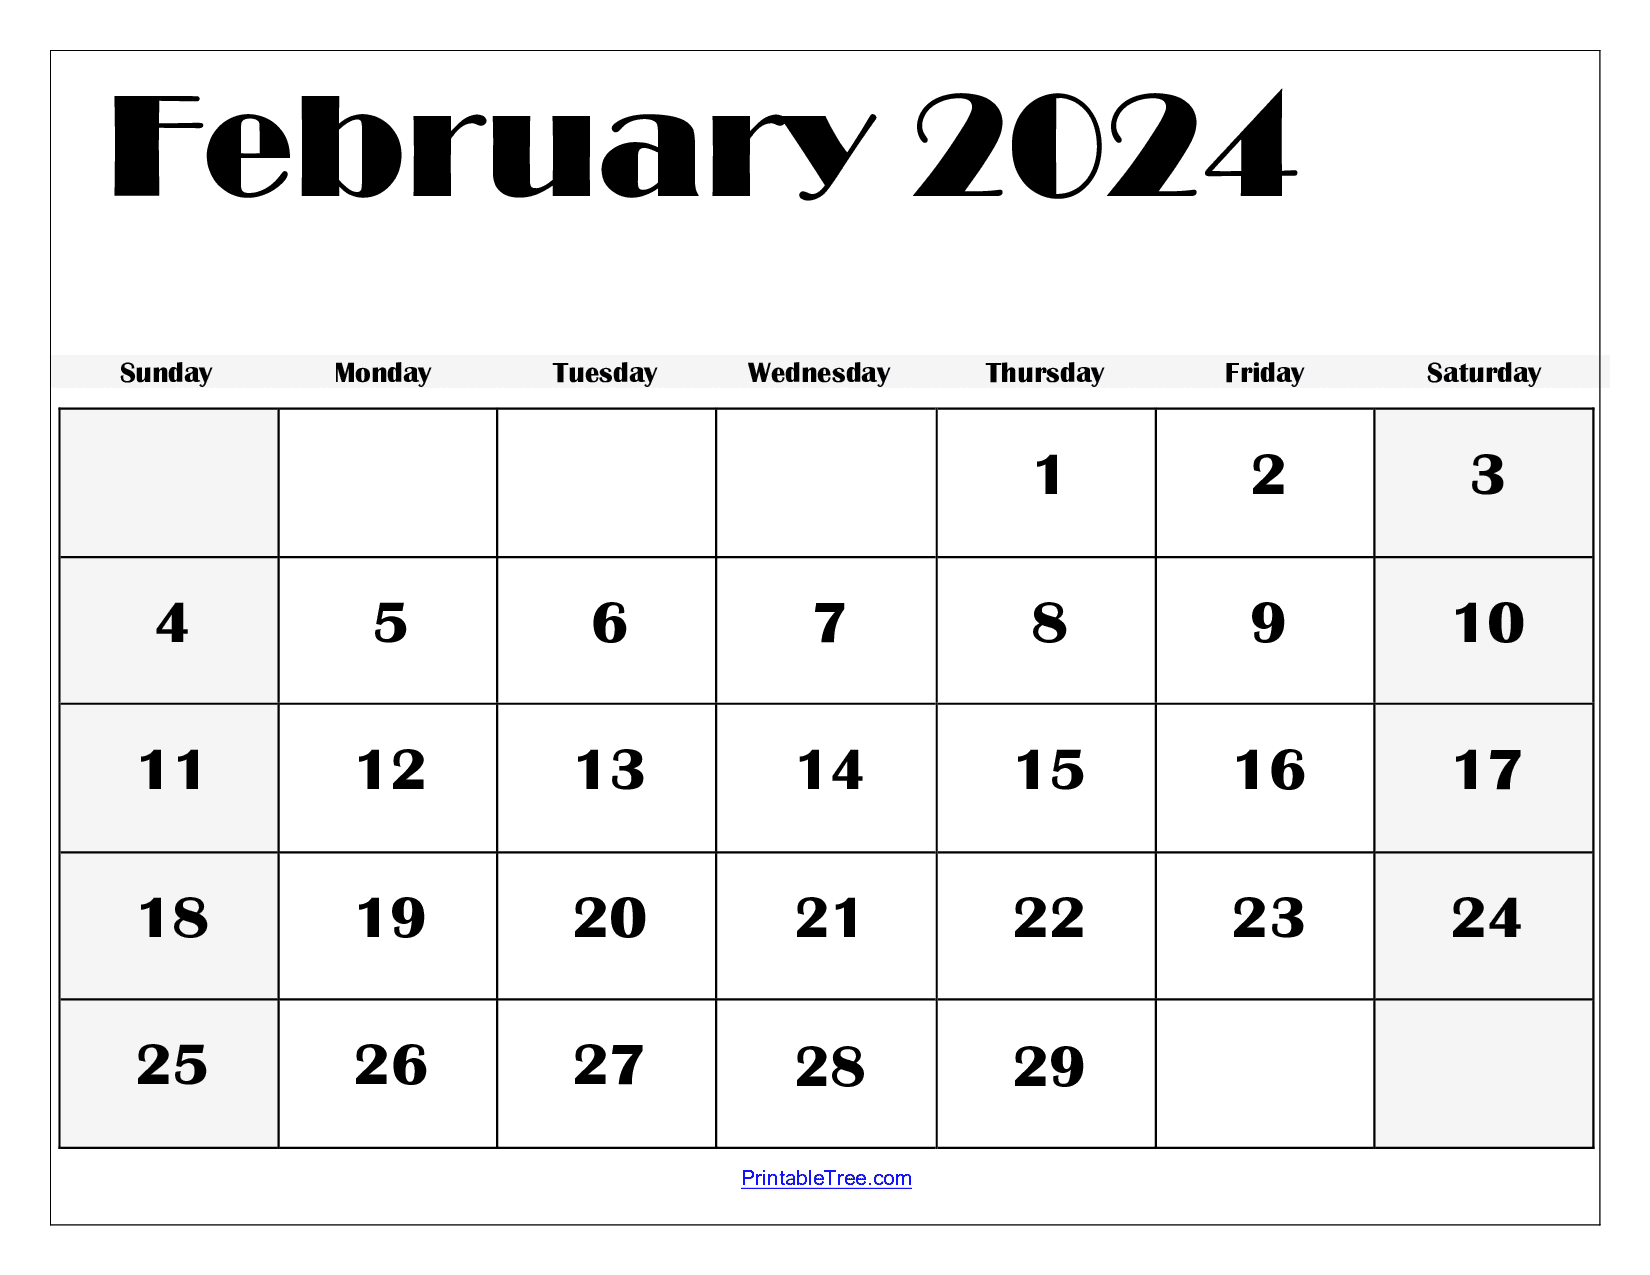 February 2024 Calendar Printable Pdf Template With Holidays for Calendar February 2024 Printable